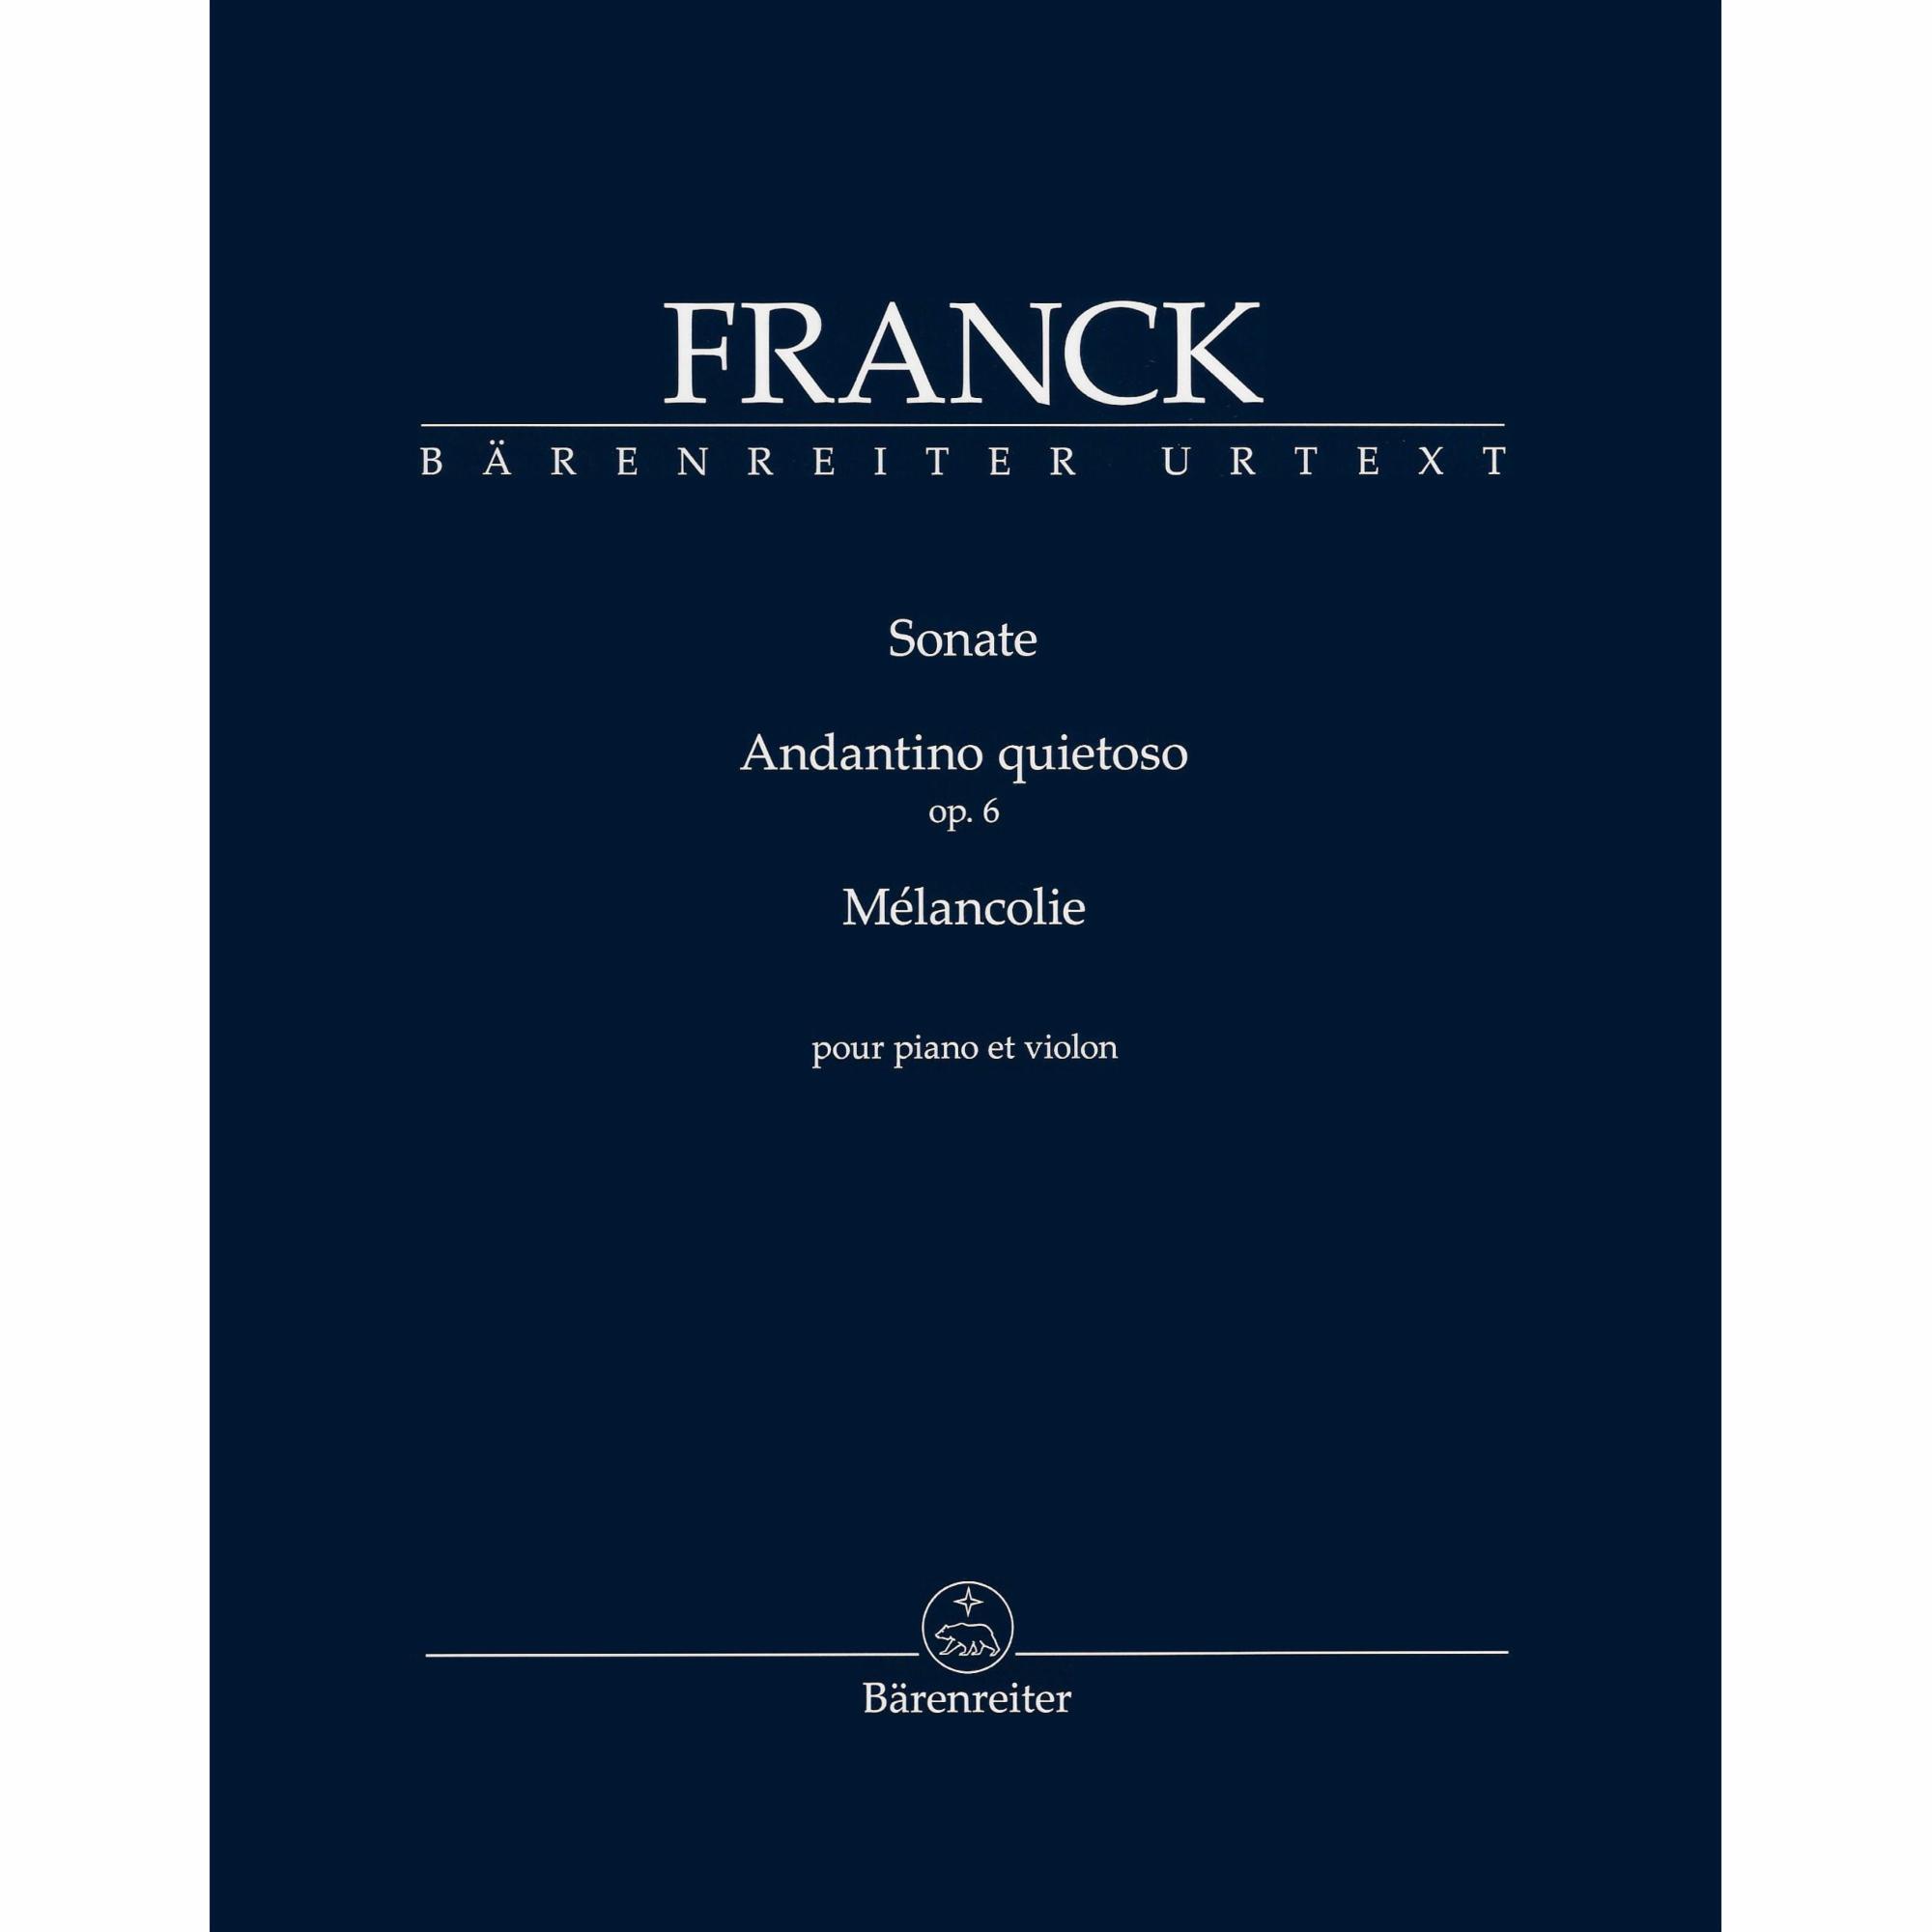 Franck -- Sonata, Andante quietoso, Op. 6, and Melancolie for Violin and Piano